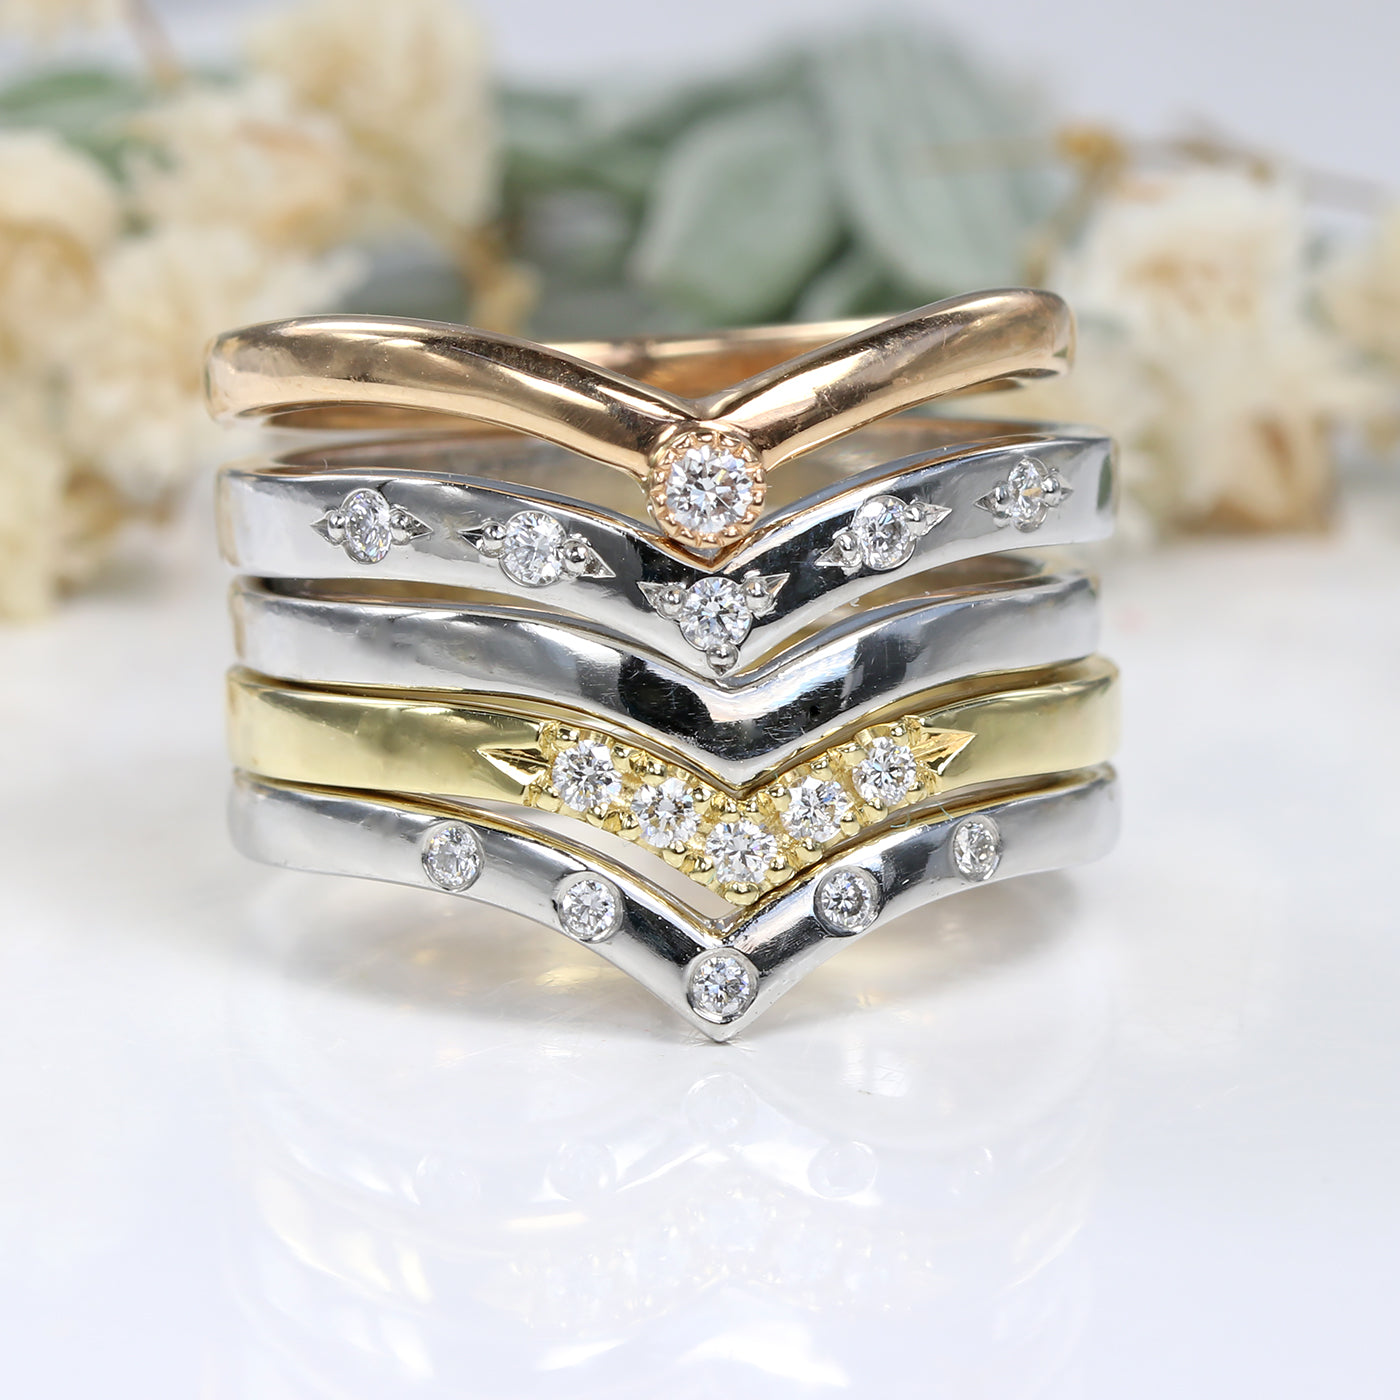 18ct Gold Pavé Diamond Wishbone Wedding or Eternity Ring - Size M